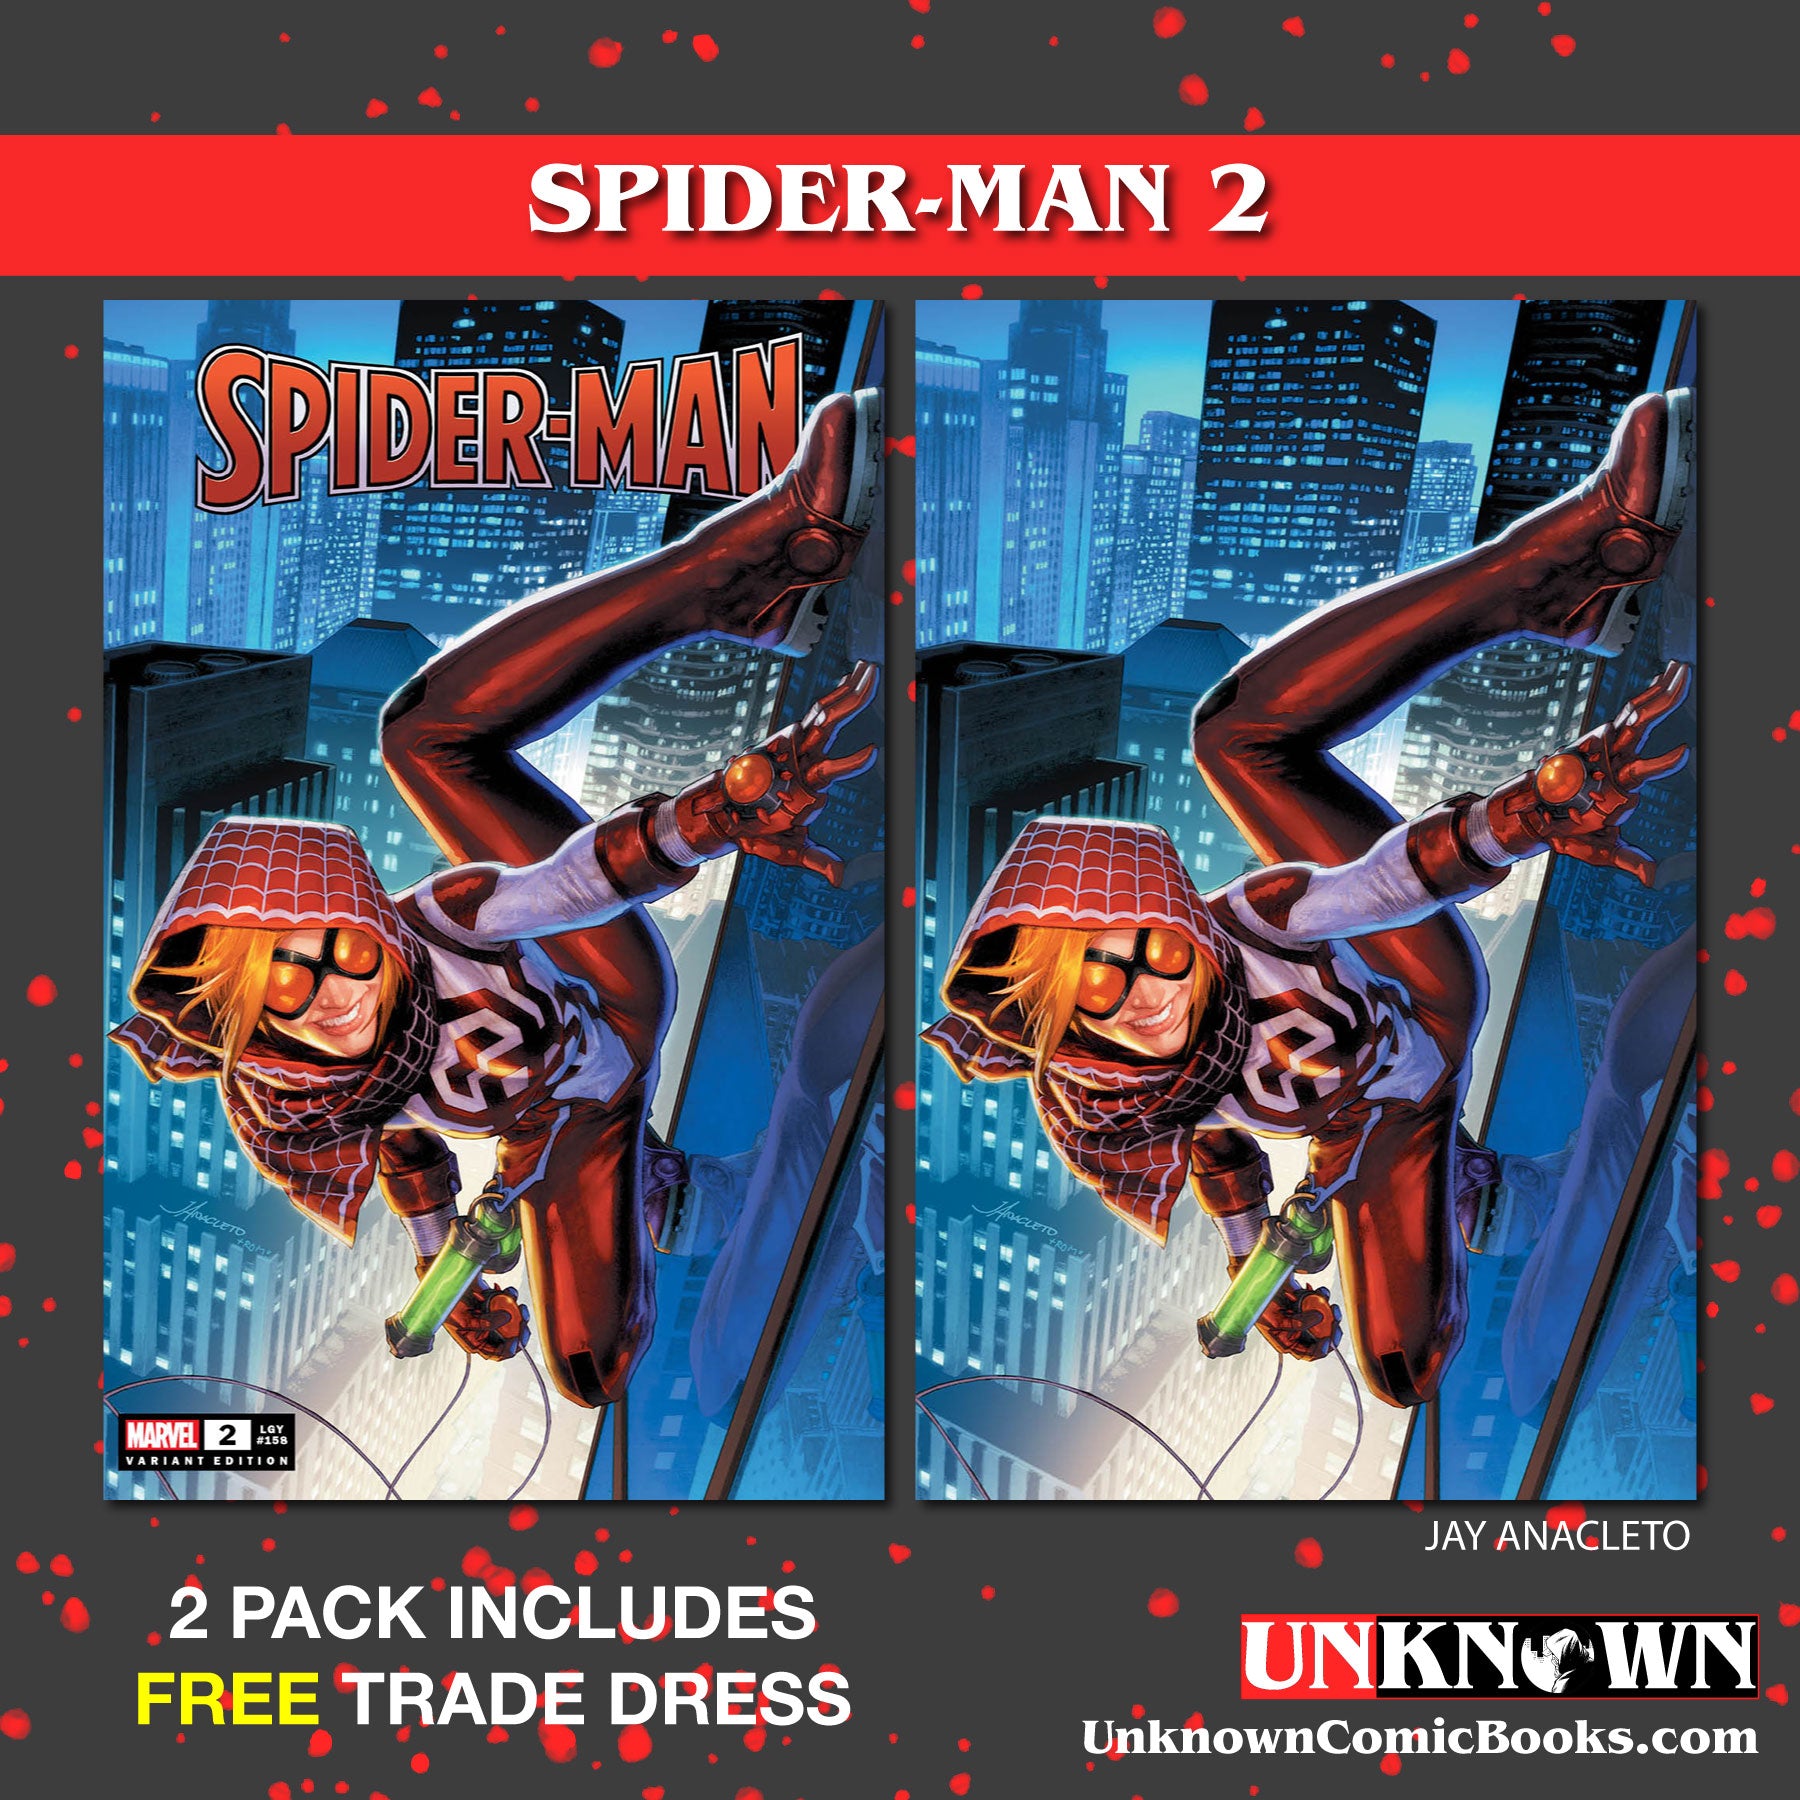 PlayStation Announces Marvel's Spider-Man 2 Prequel Comic - Game Informer